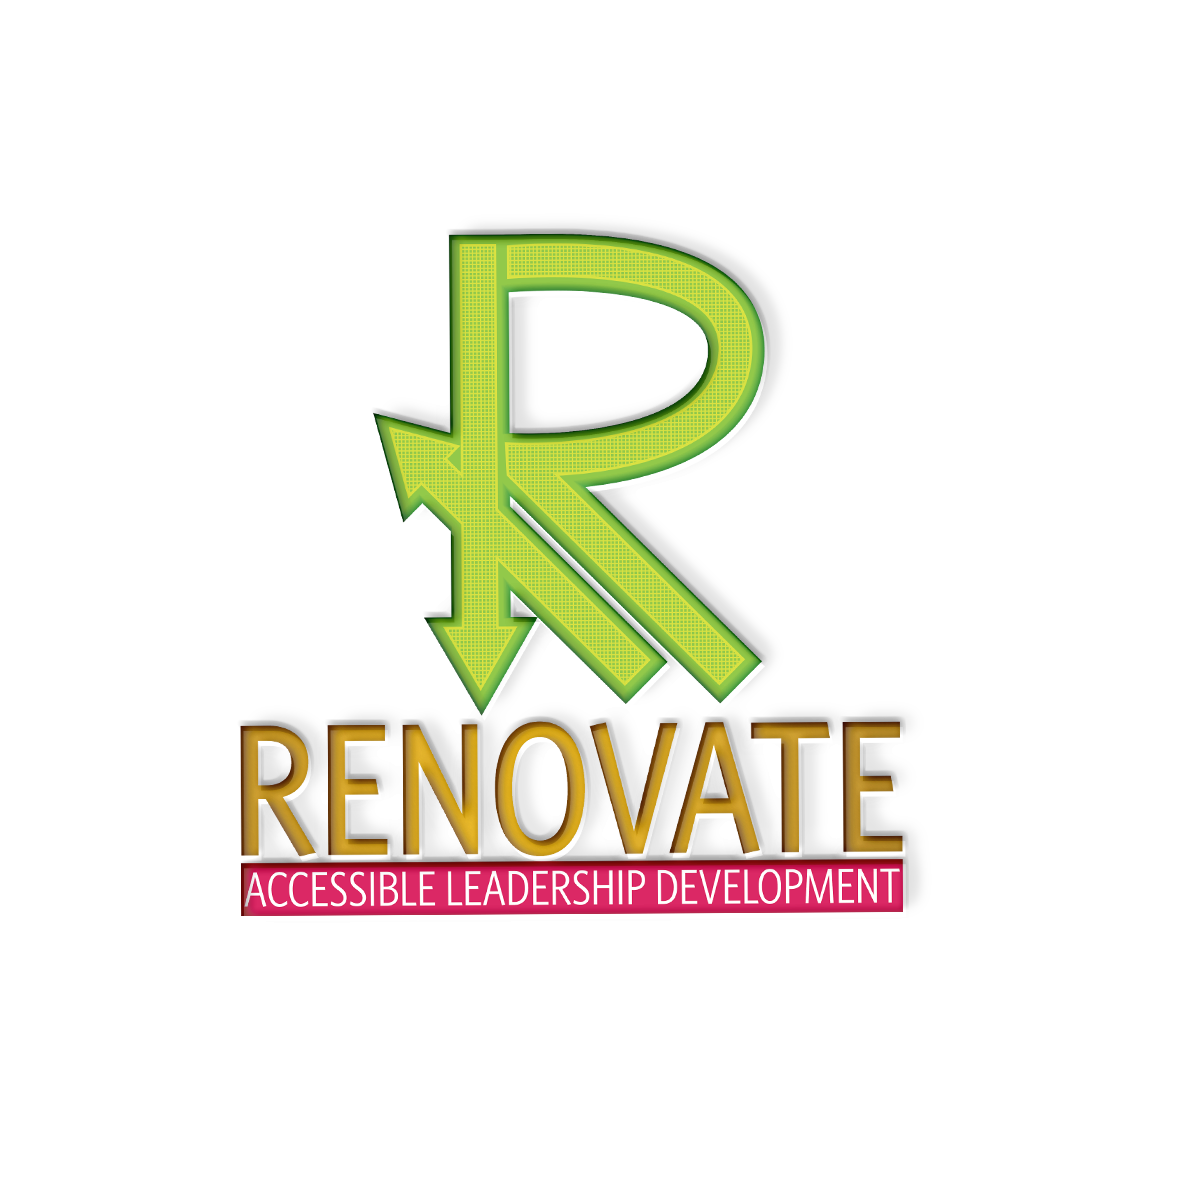 Renovate: Accessible Leadership Development